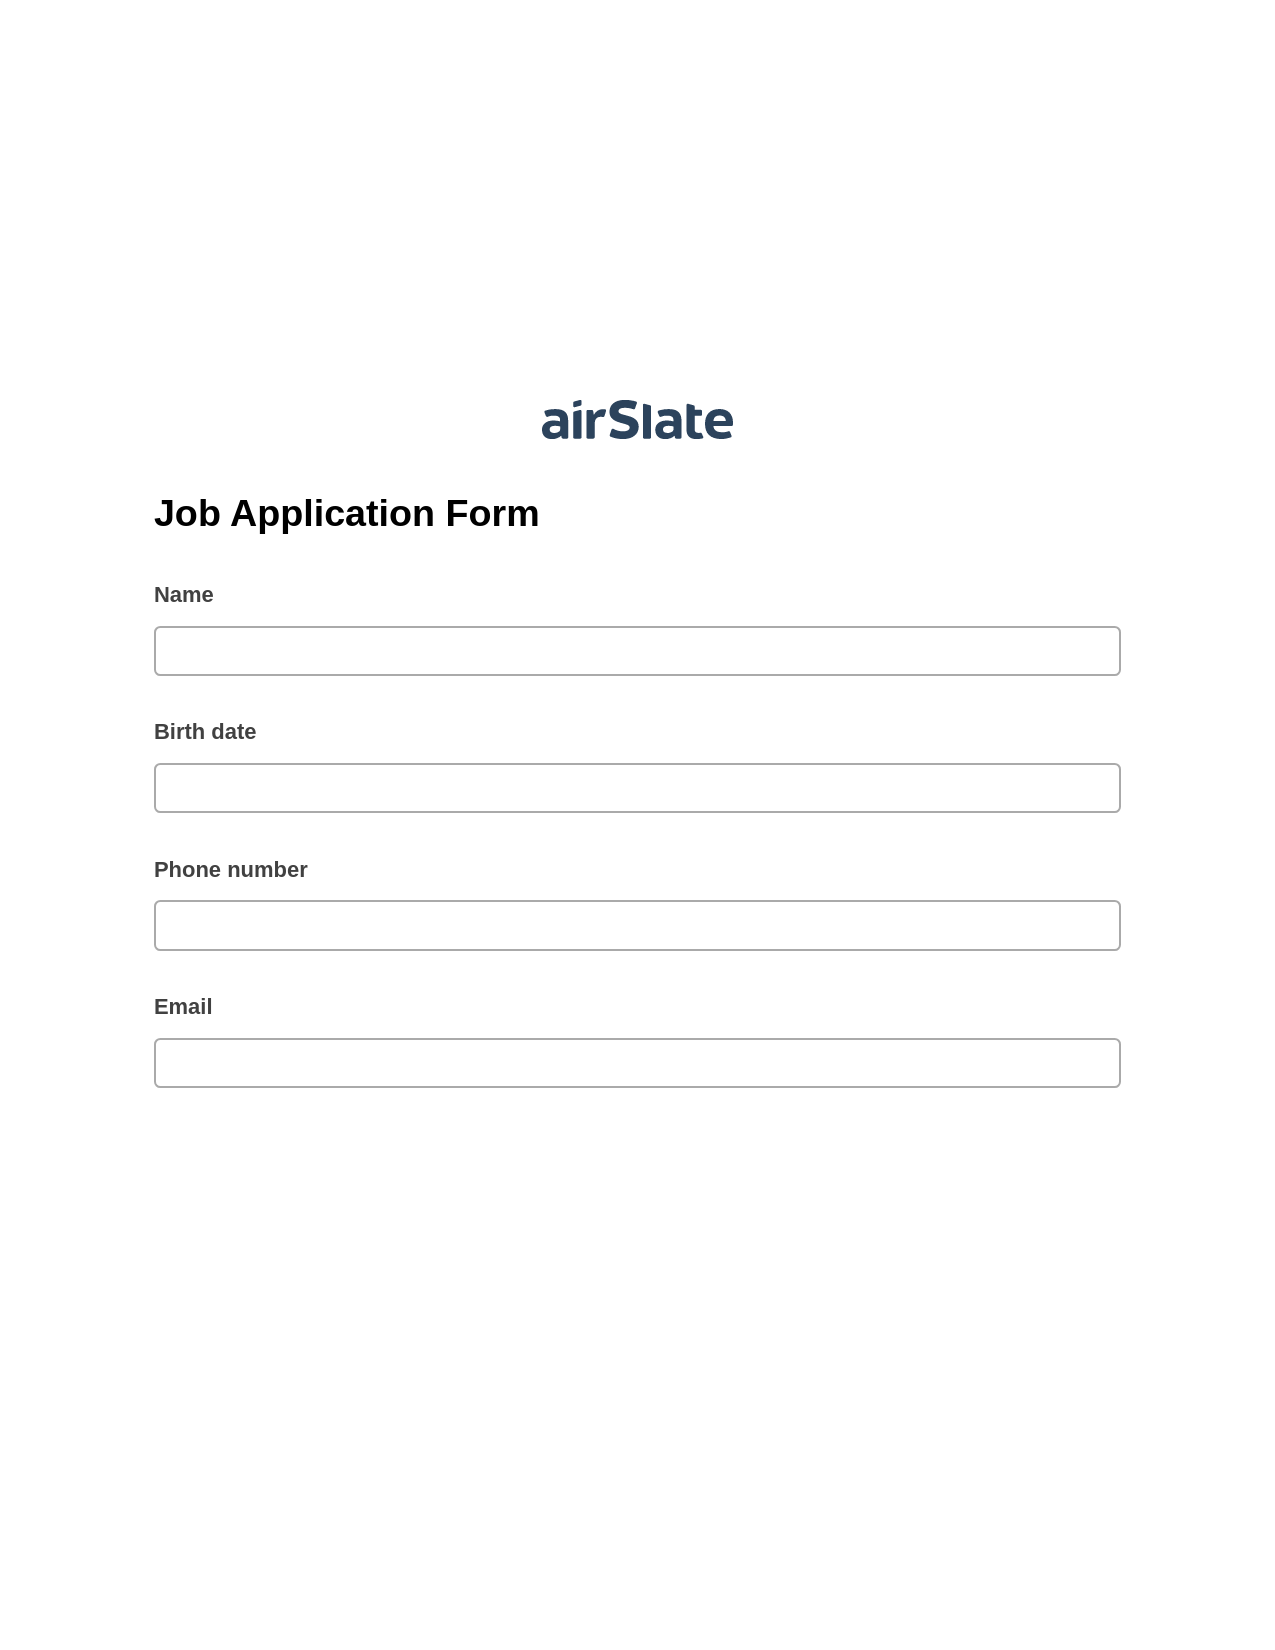 Multirole Job Application Form Pre-fill Slate from MS Dynamics 365 Records Bot, SendGrid send Campaign bot, Text Message Notification Postfinish Bot